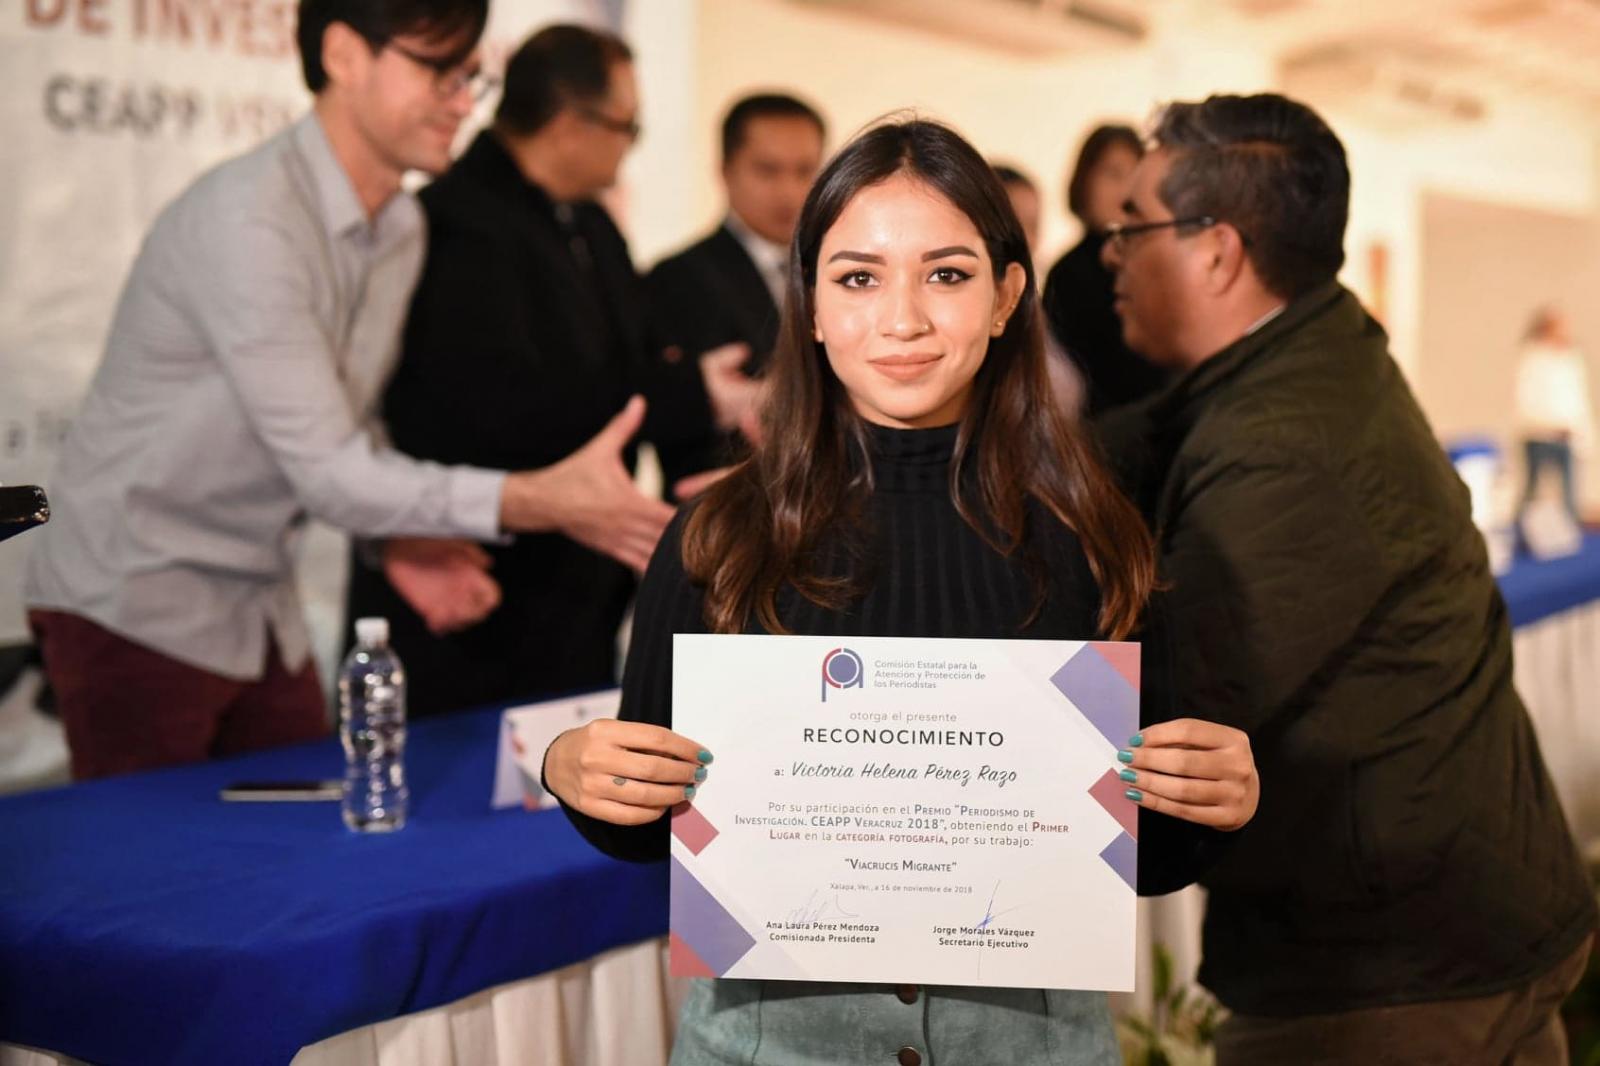 Winner of the CEAPP Veracruz 2018 Research Journalism Award